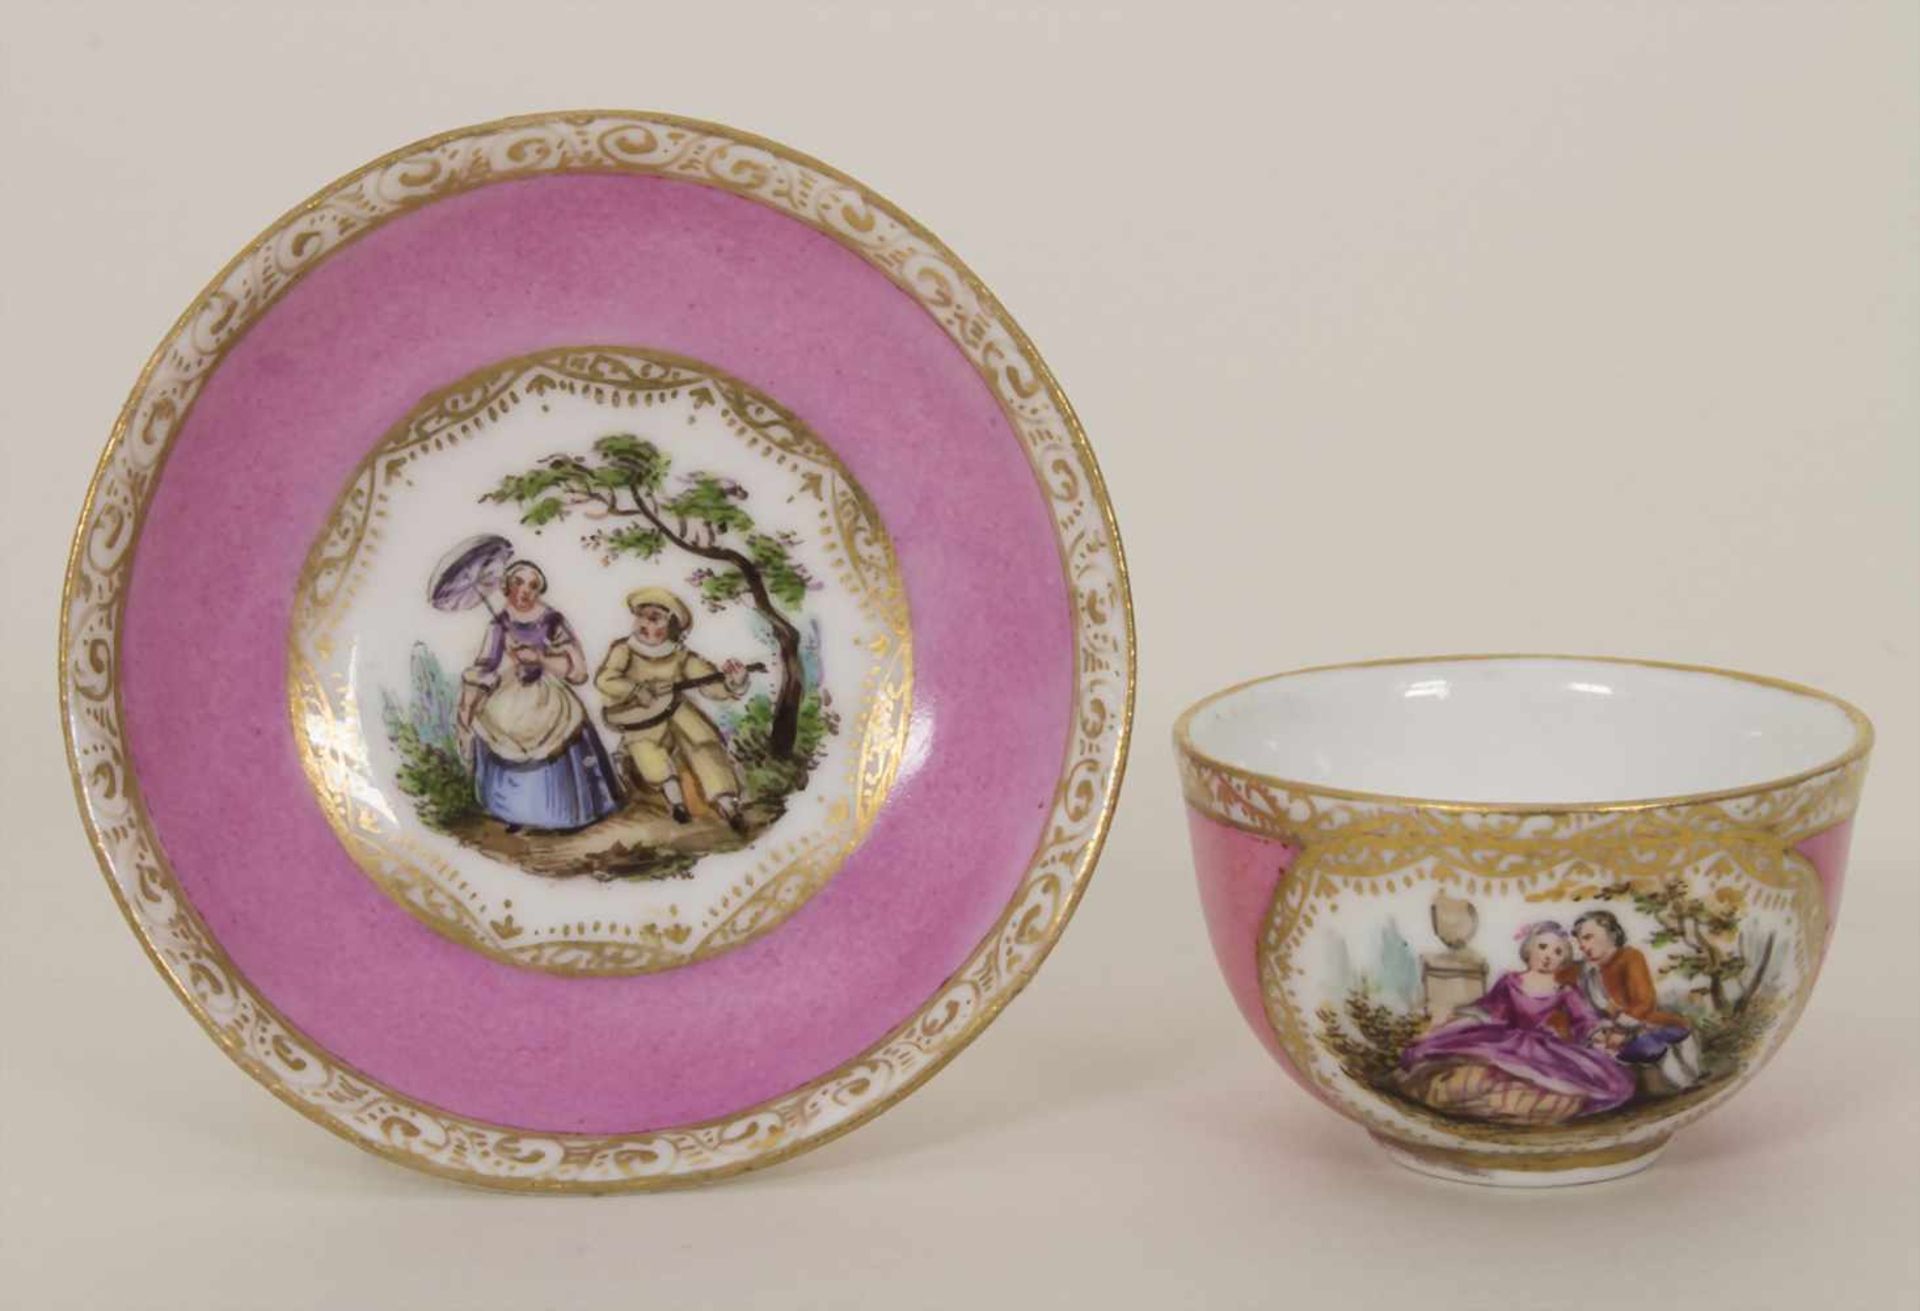 Miniatur Tasse und Untertasse mit galanten Szenen / A miniature cup and saucer with courteous